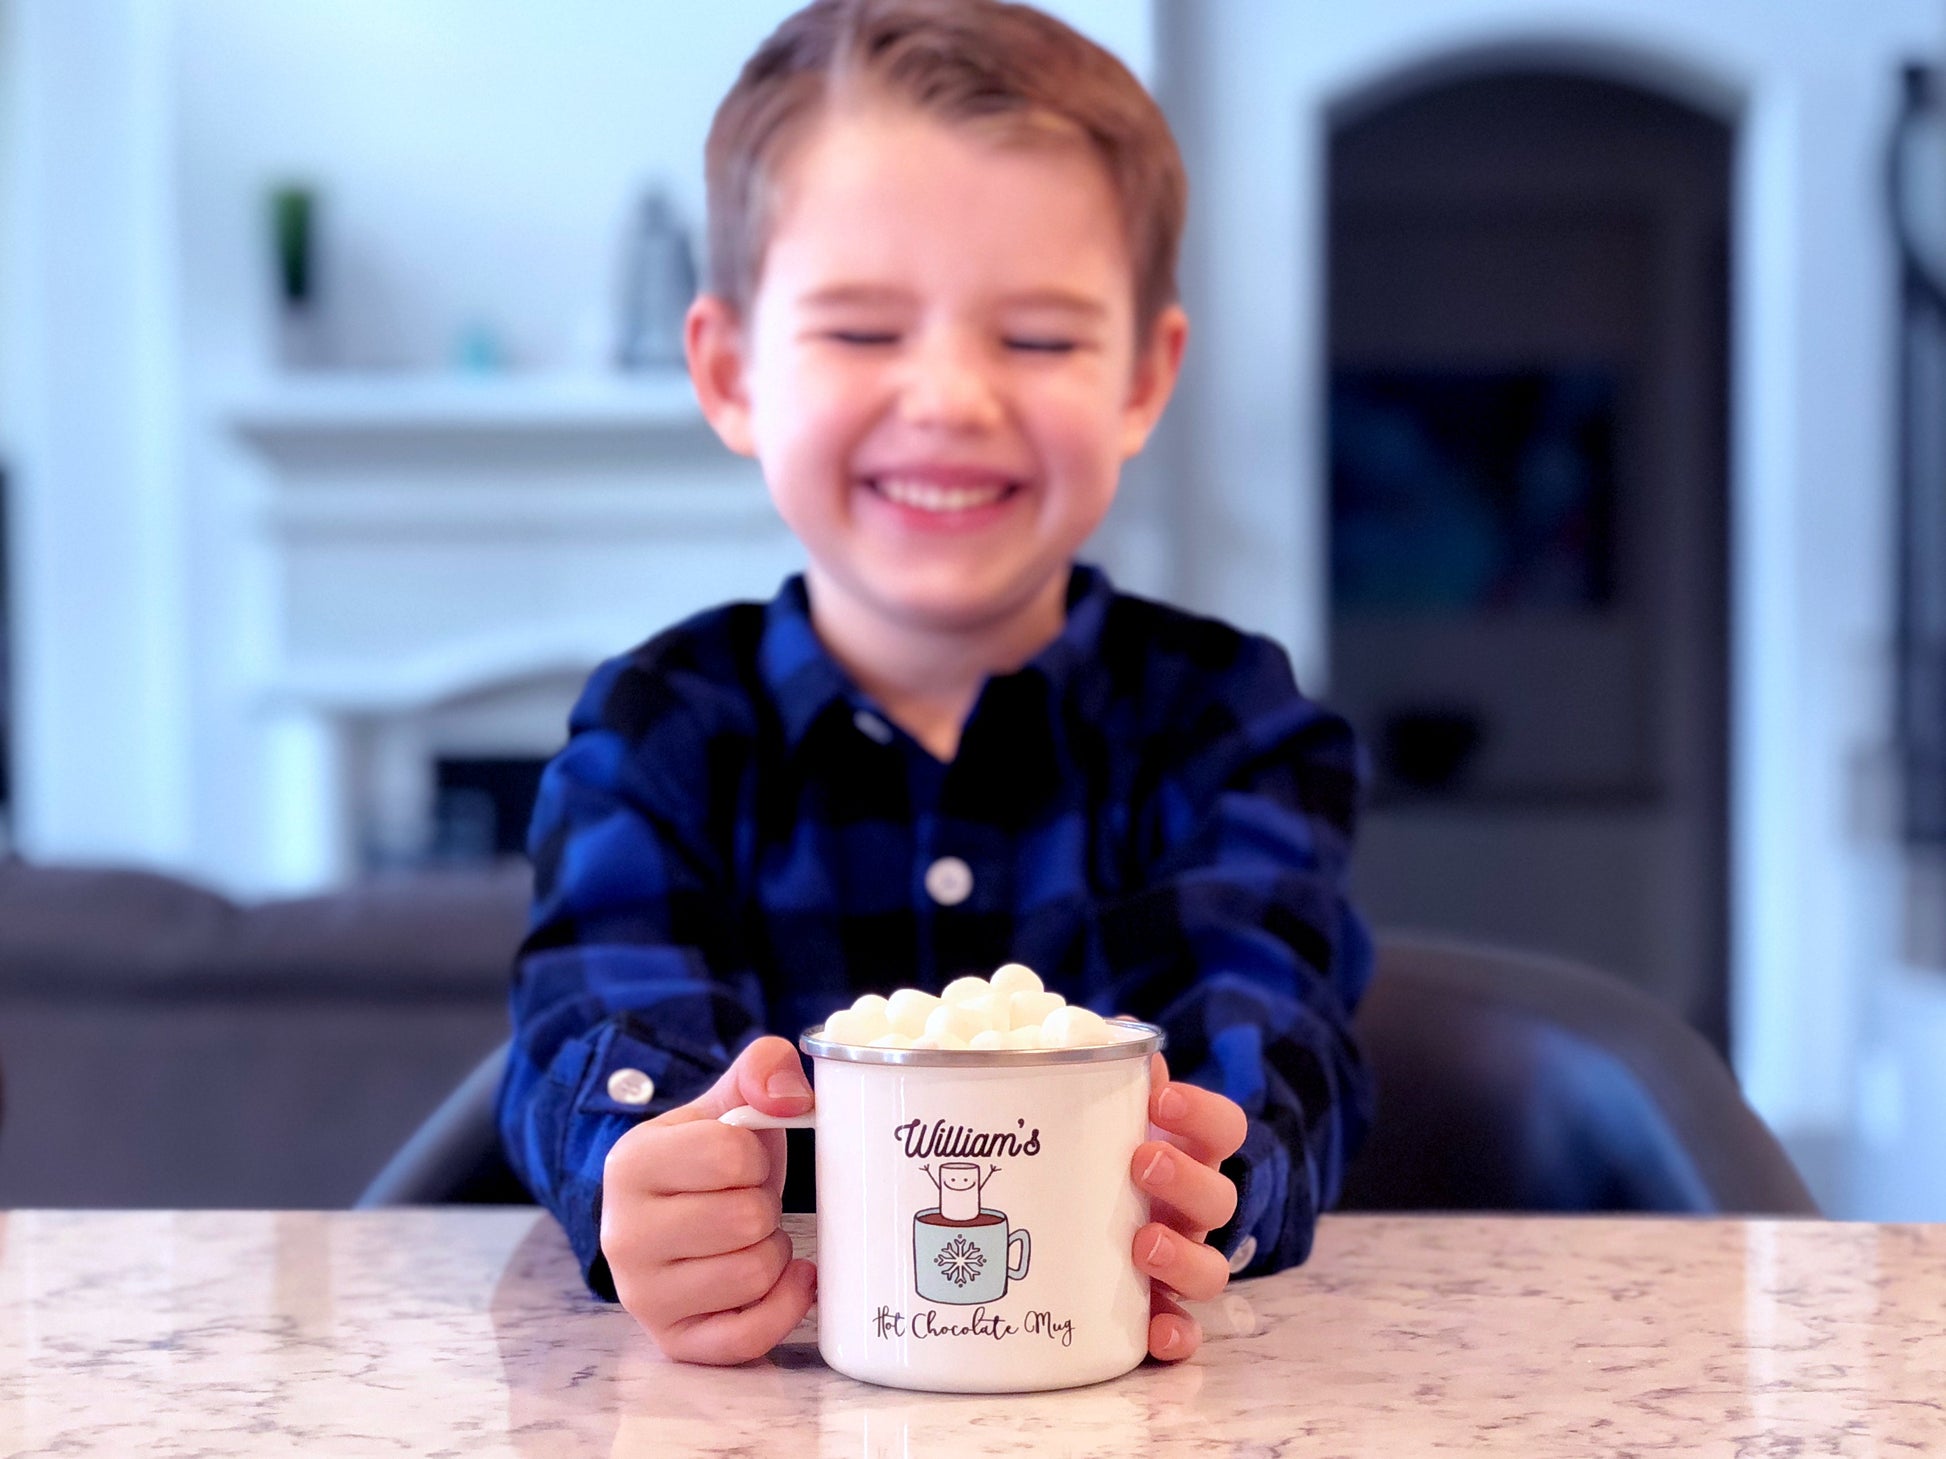 Personalized Hot Chocolate Mug | Blue Design | Christmas Gift For Kids - Stick'em Up Baby®